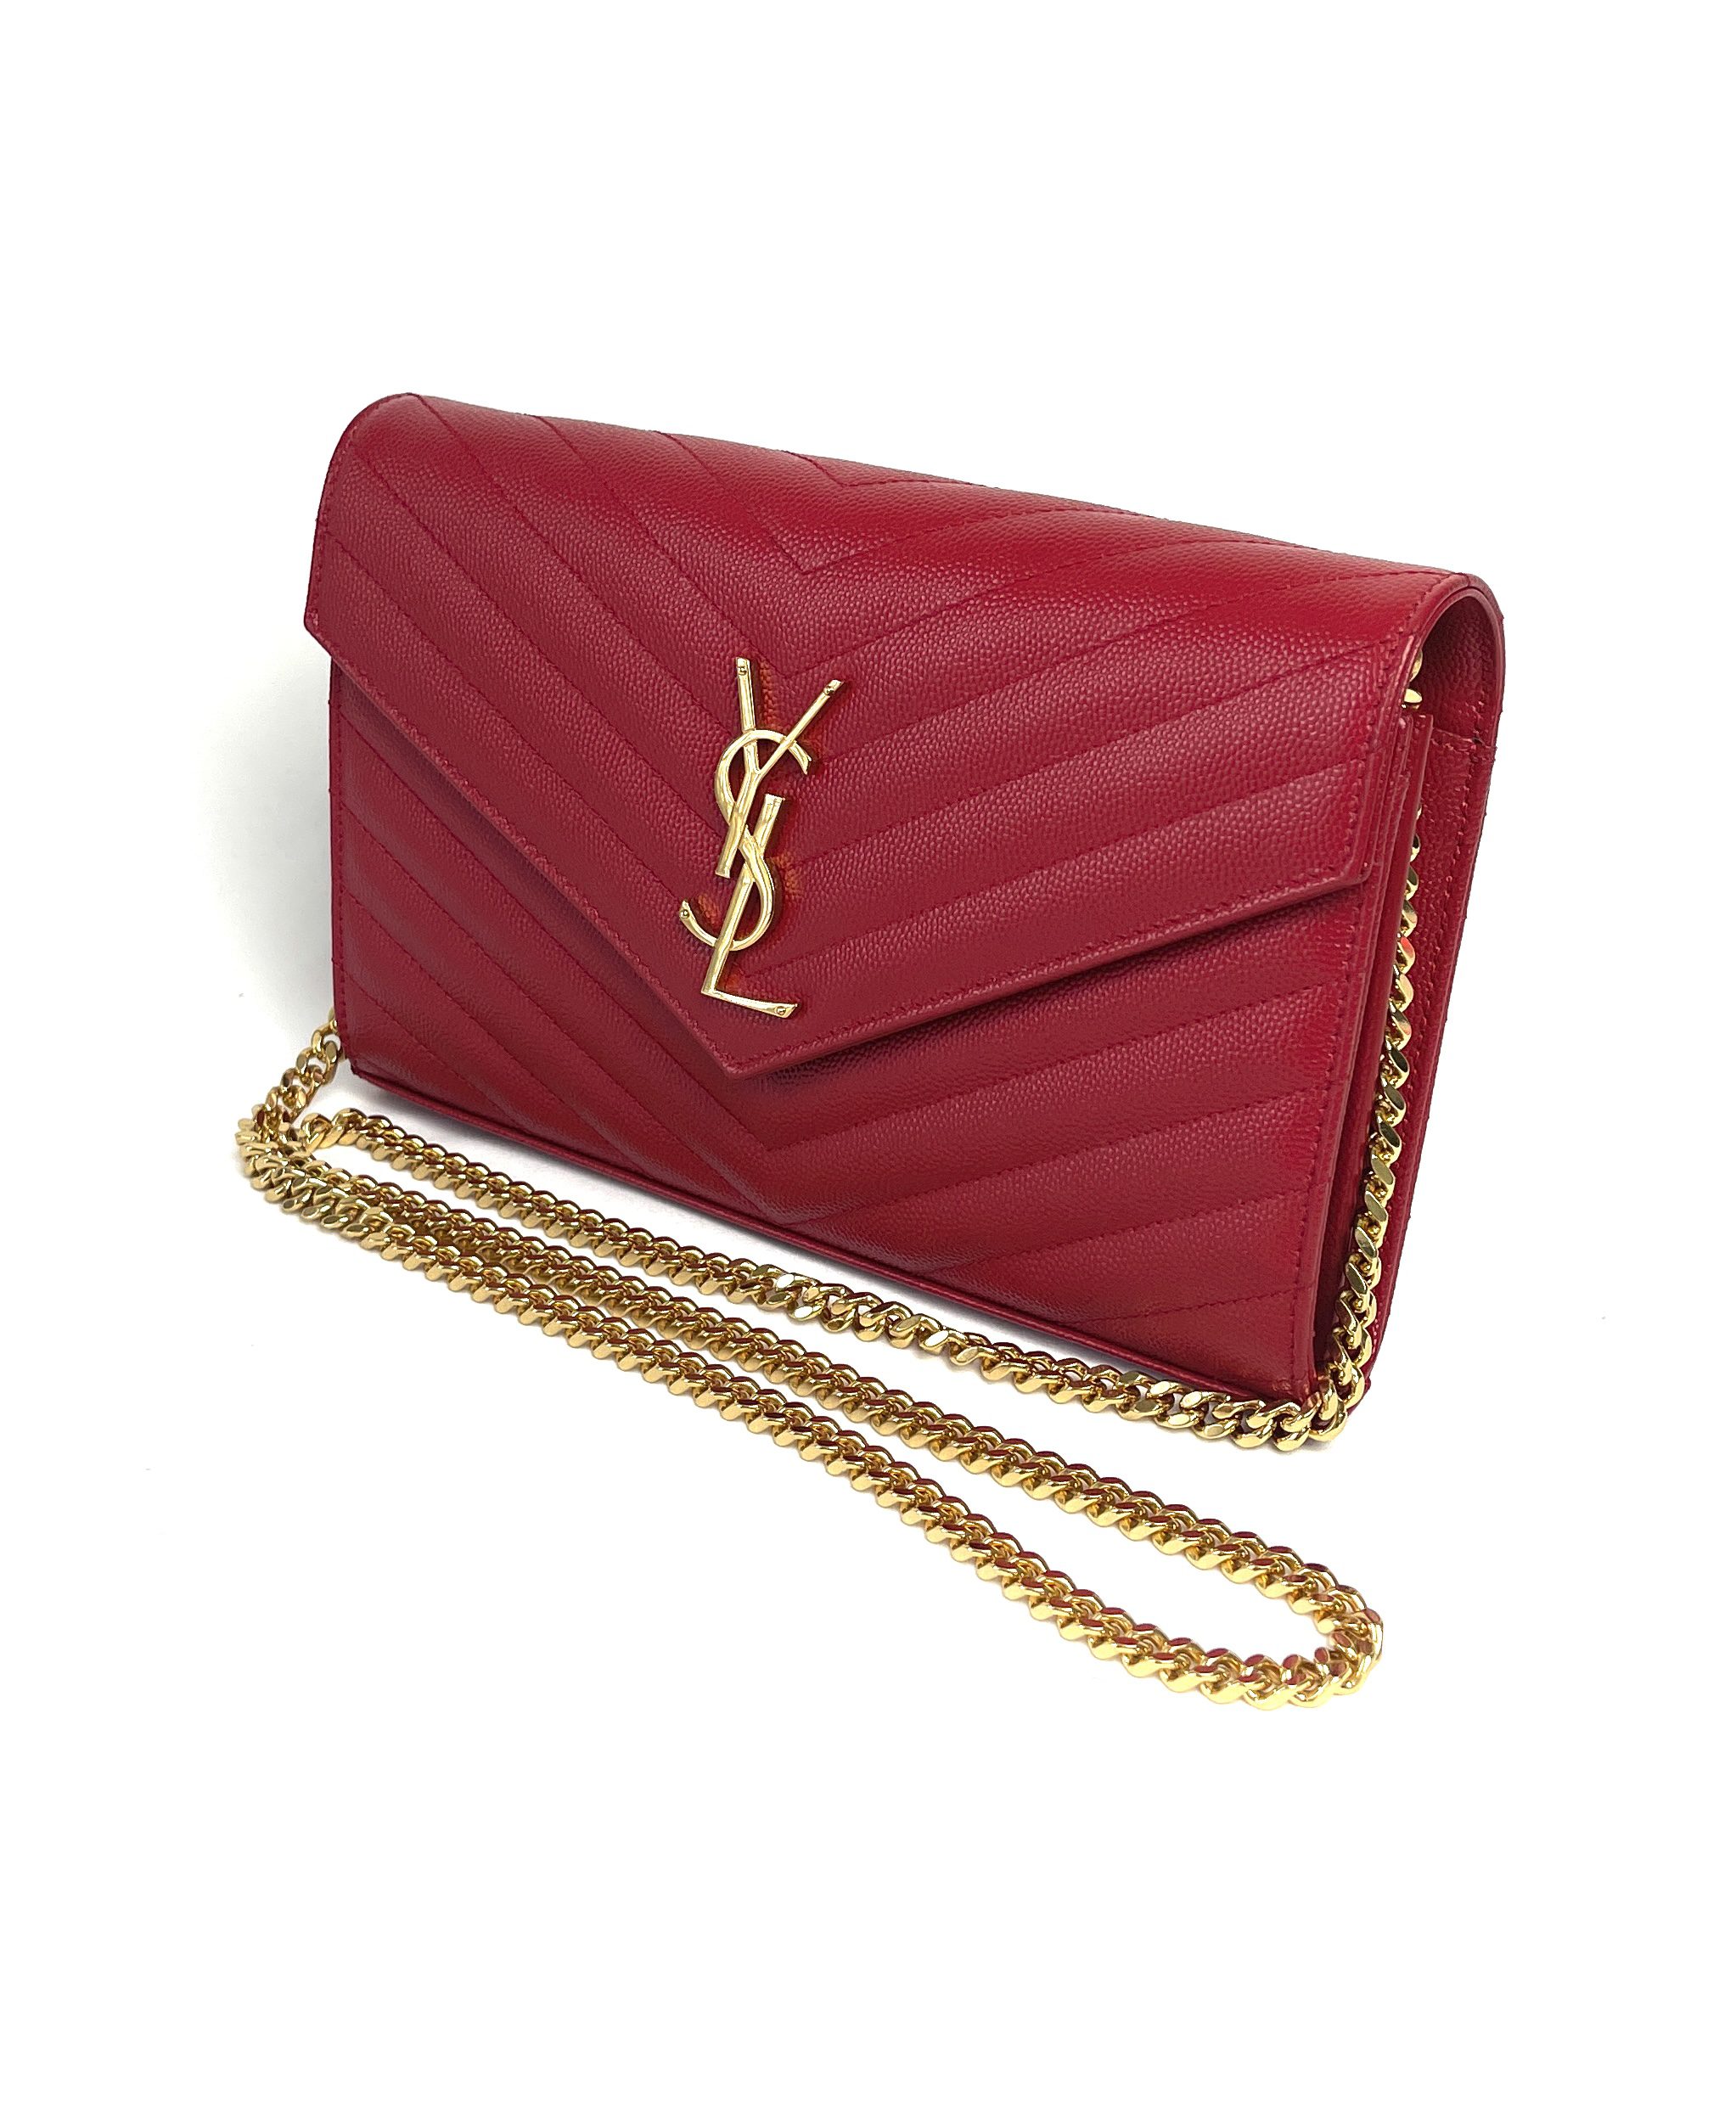 YSL Monogram Wallet on Chain Grain De Poudre Envelope Red Leather